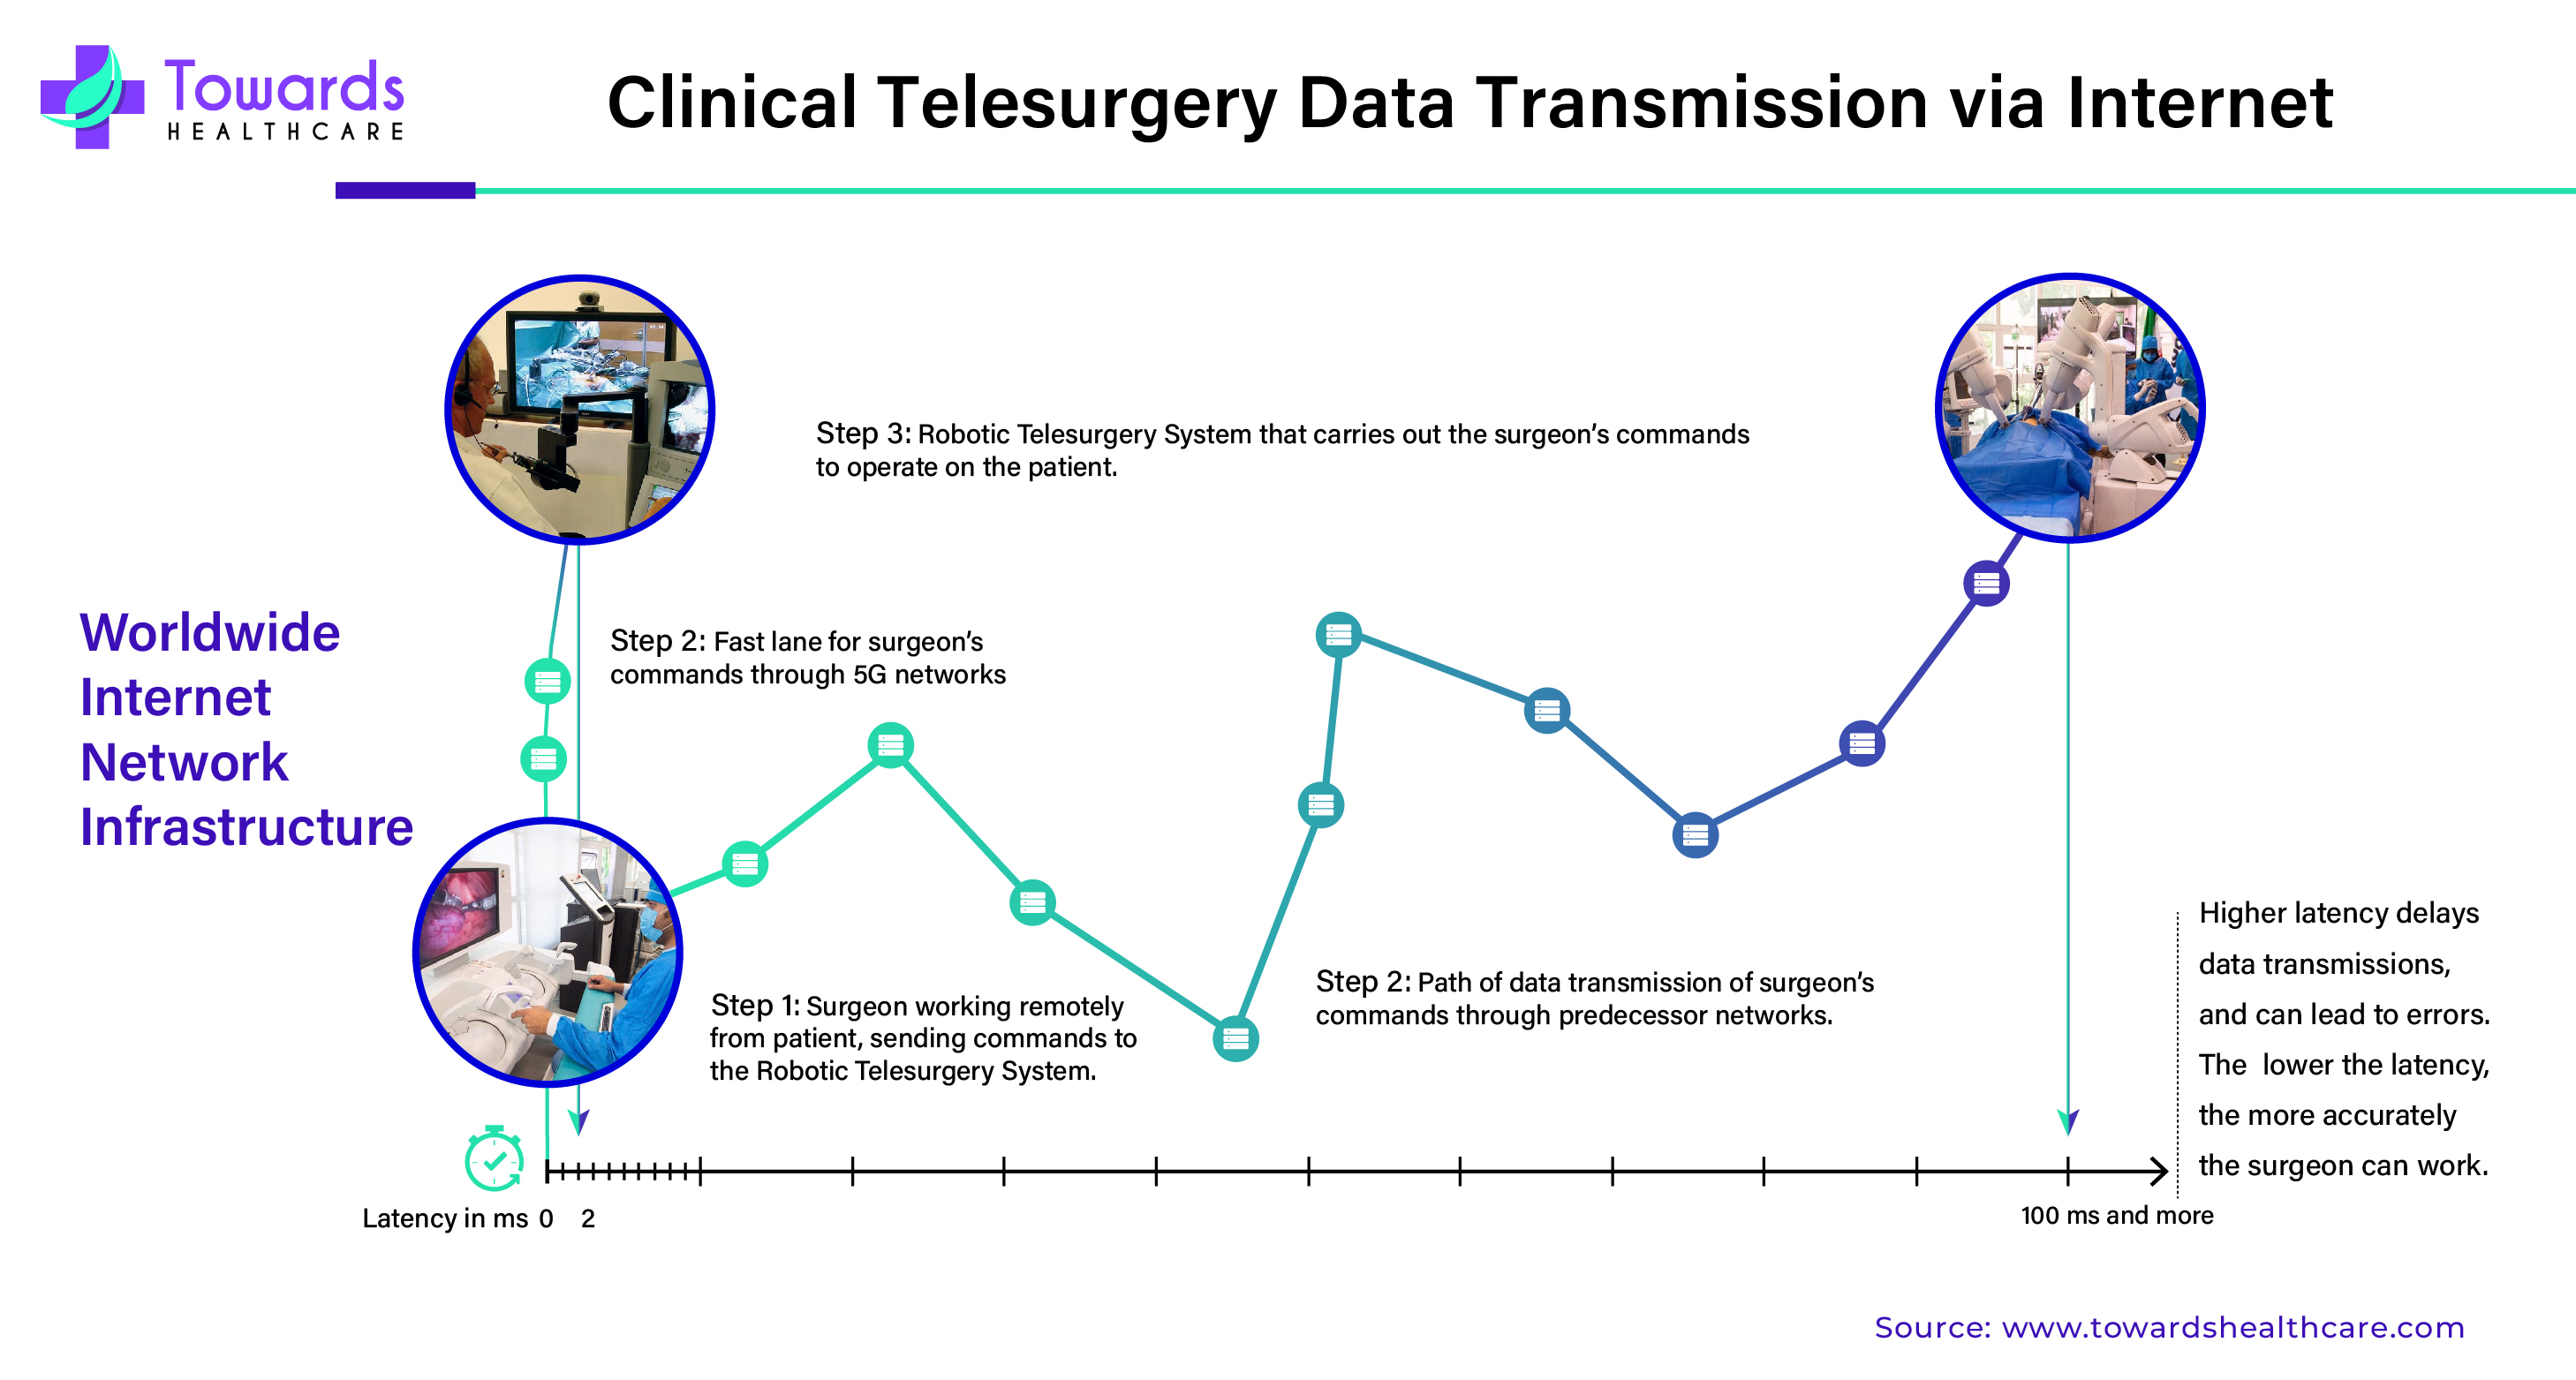 Clinical Telesurgery Data Transmission via Internet